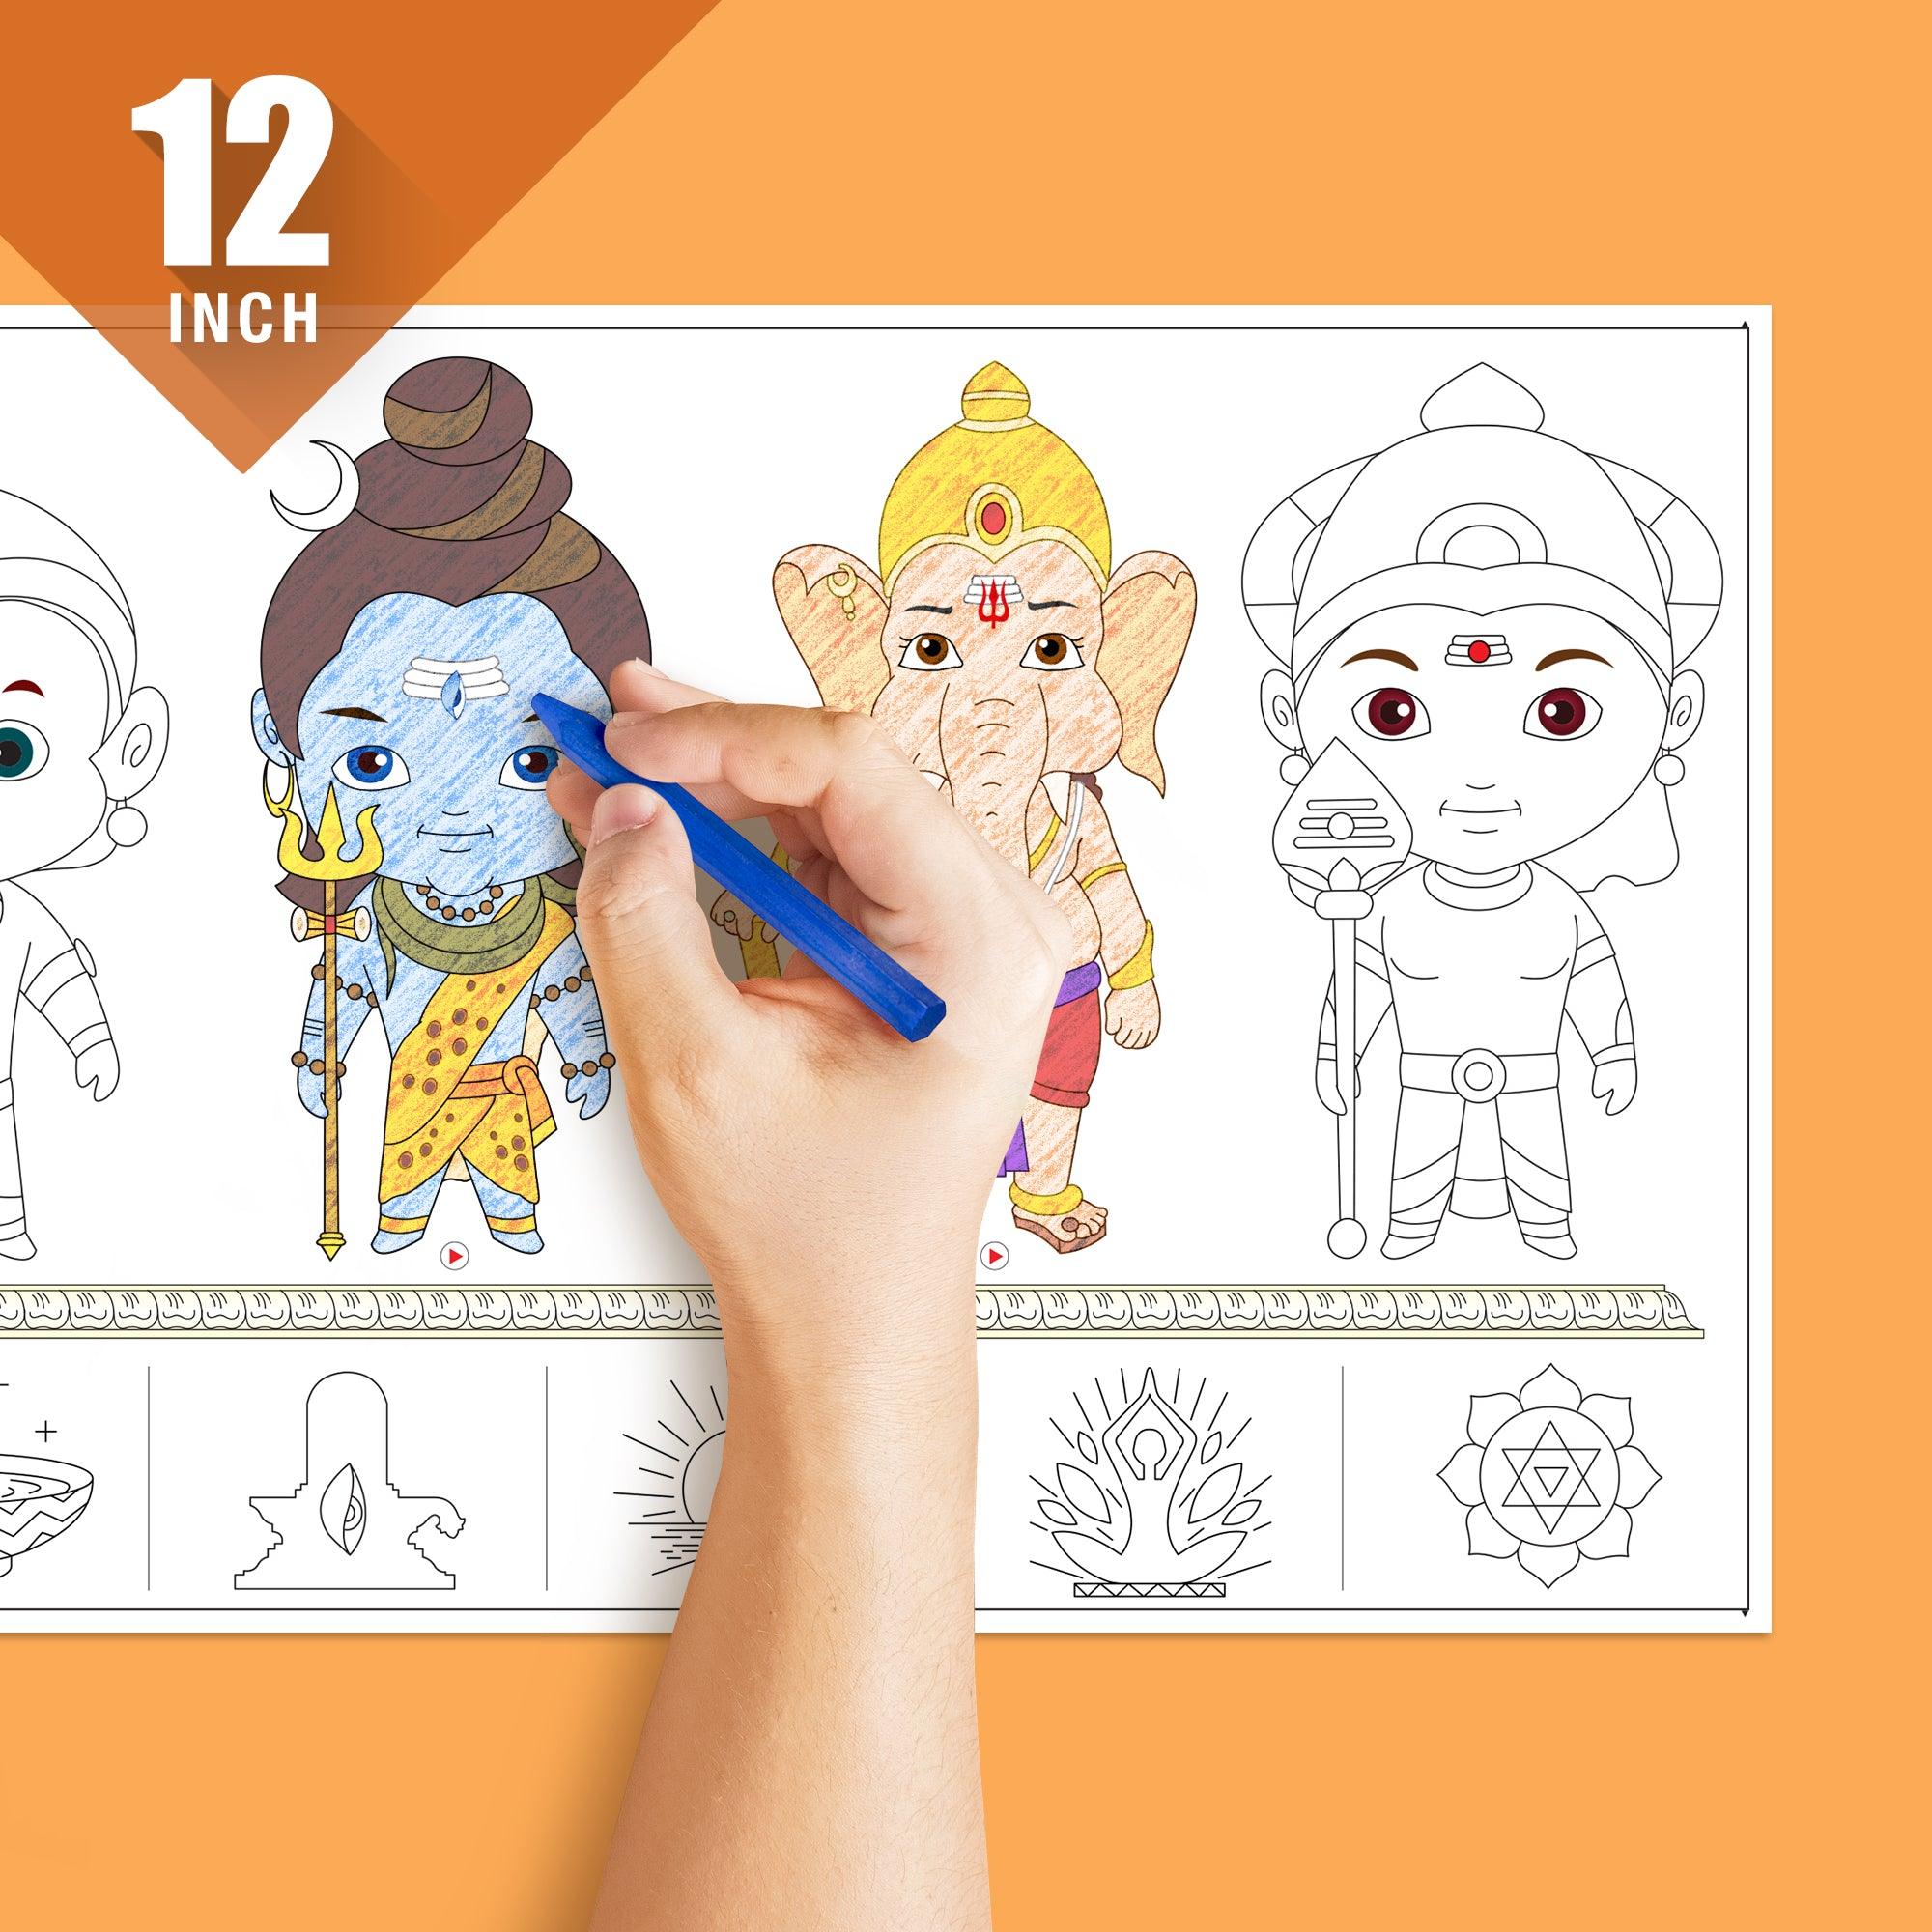 Pencils Hanuman ji pencil colour drawing, Size: 20 24